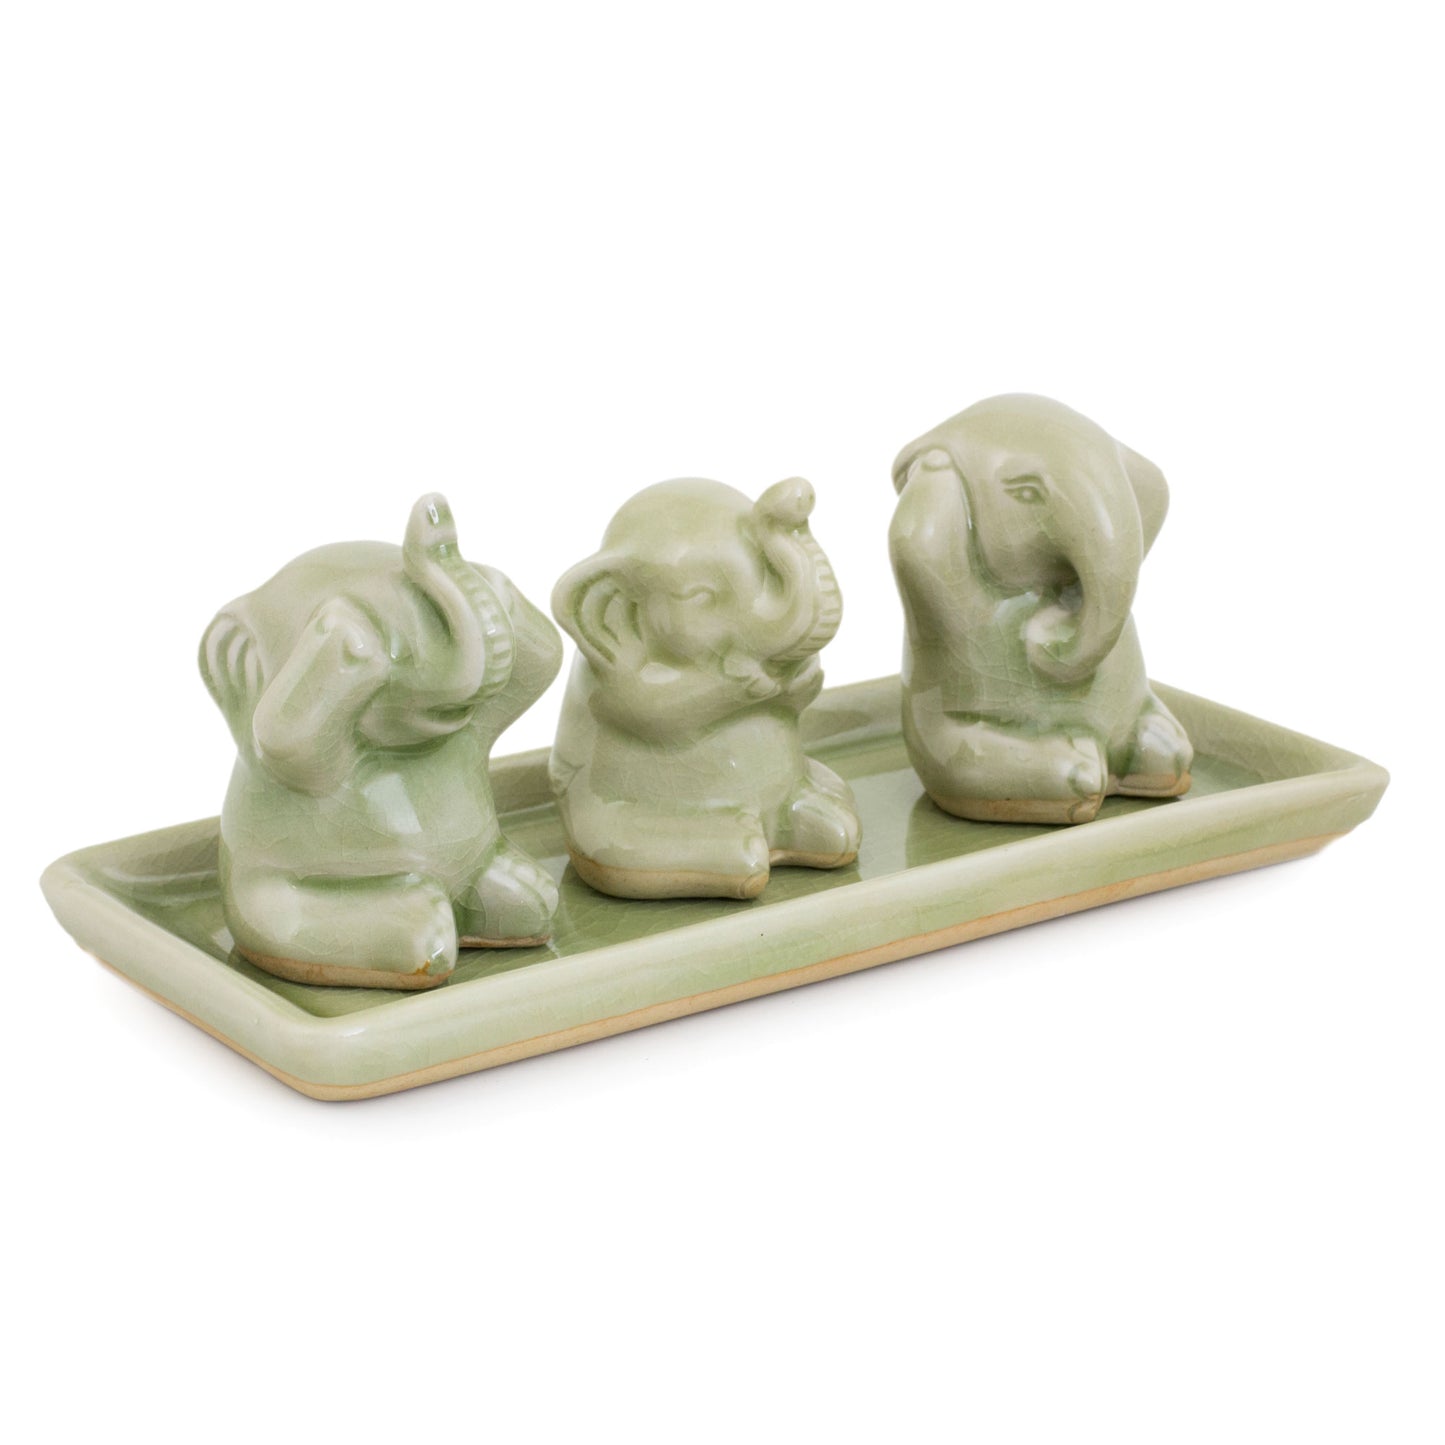 Elephant Life Lessons Celadon ceramic figurines (Set of 3)